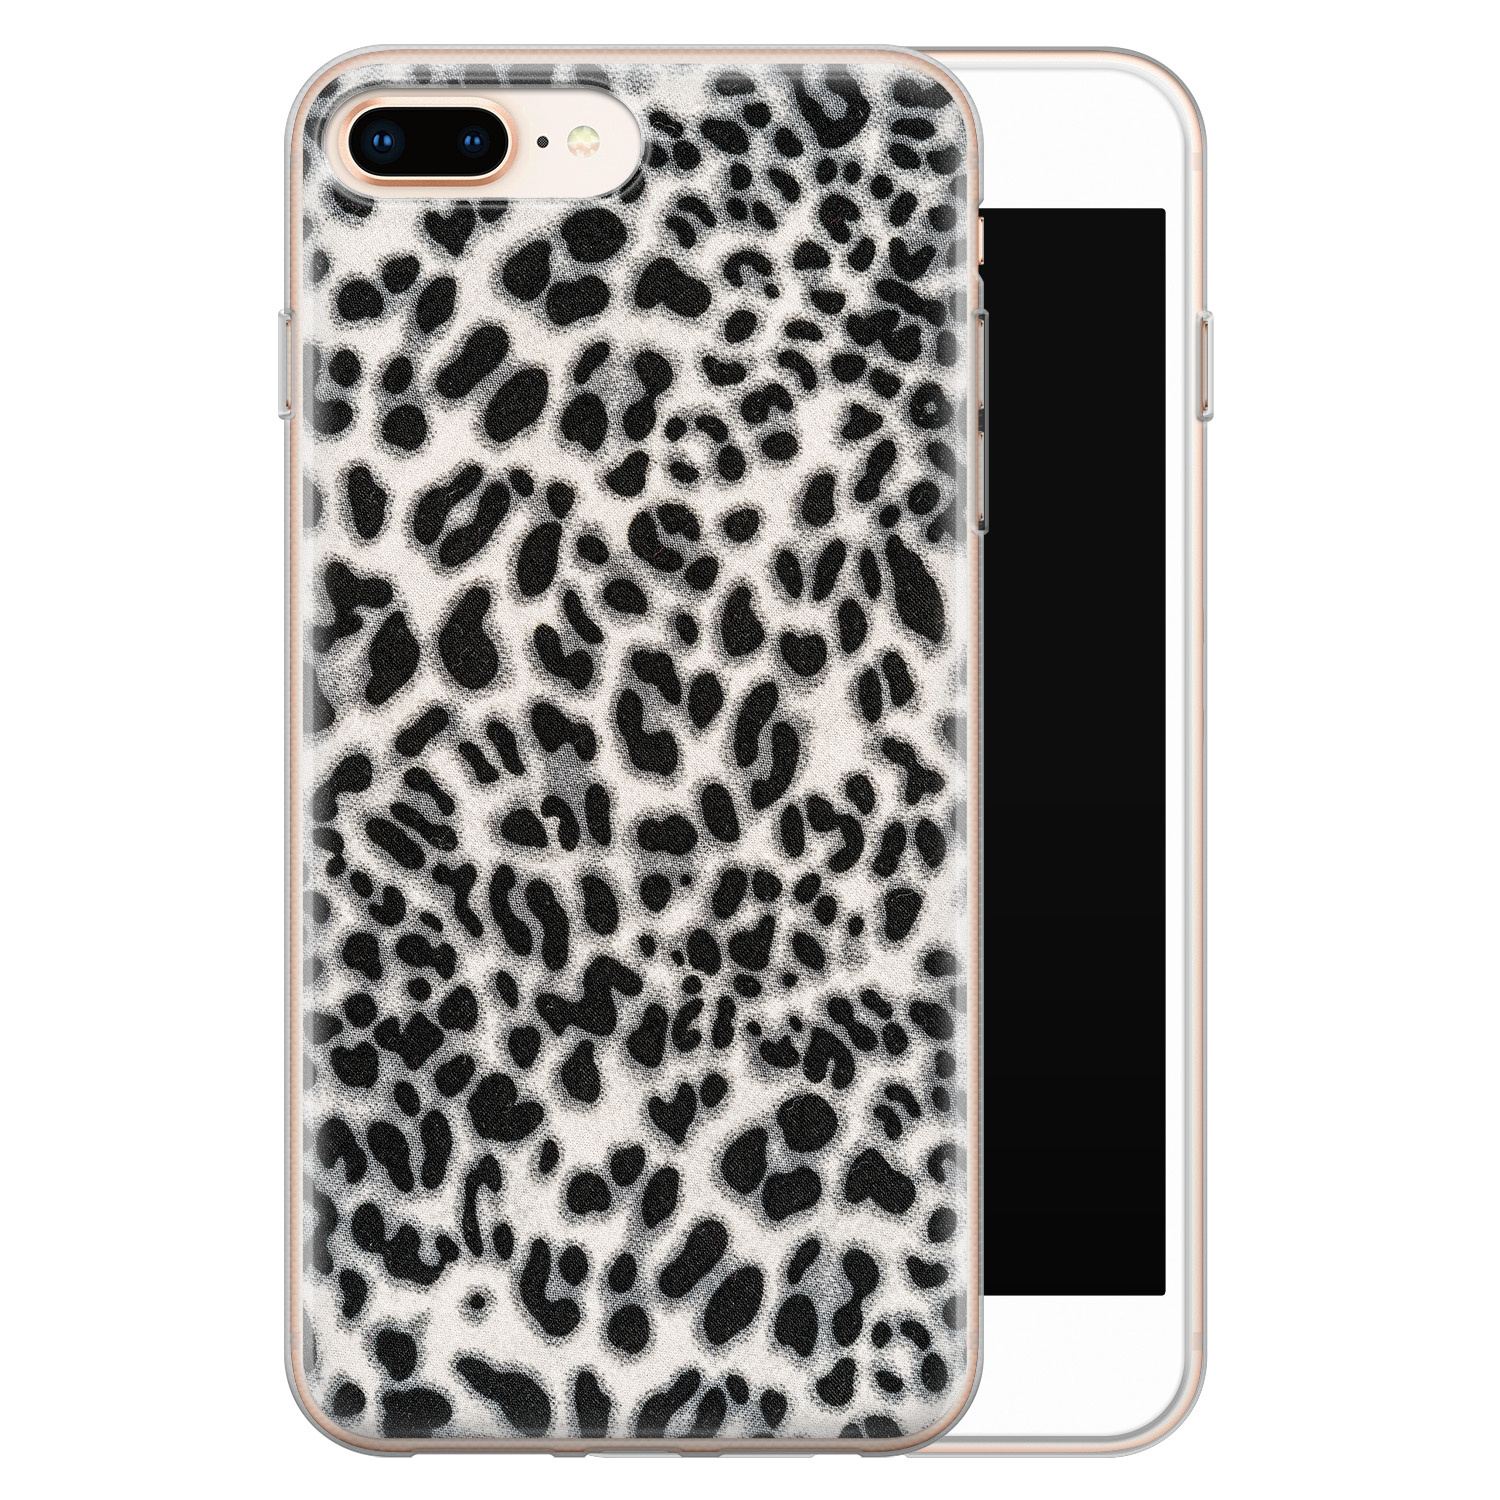 Leuke Telefoonhoesjes iPhone 8 Plus/7 Plus siliconen hoesje - Luipaard grijs